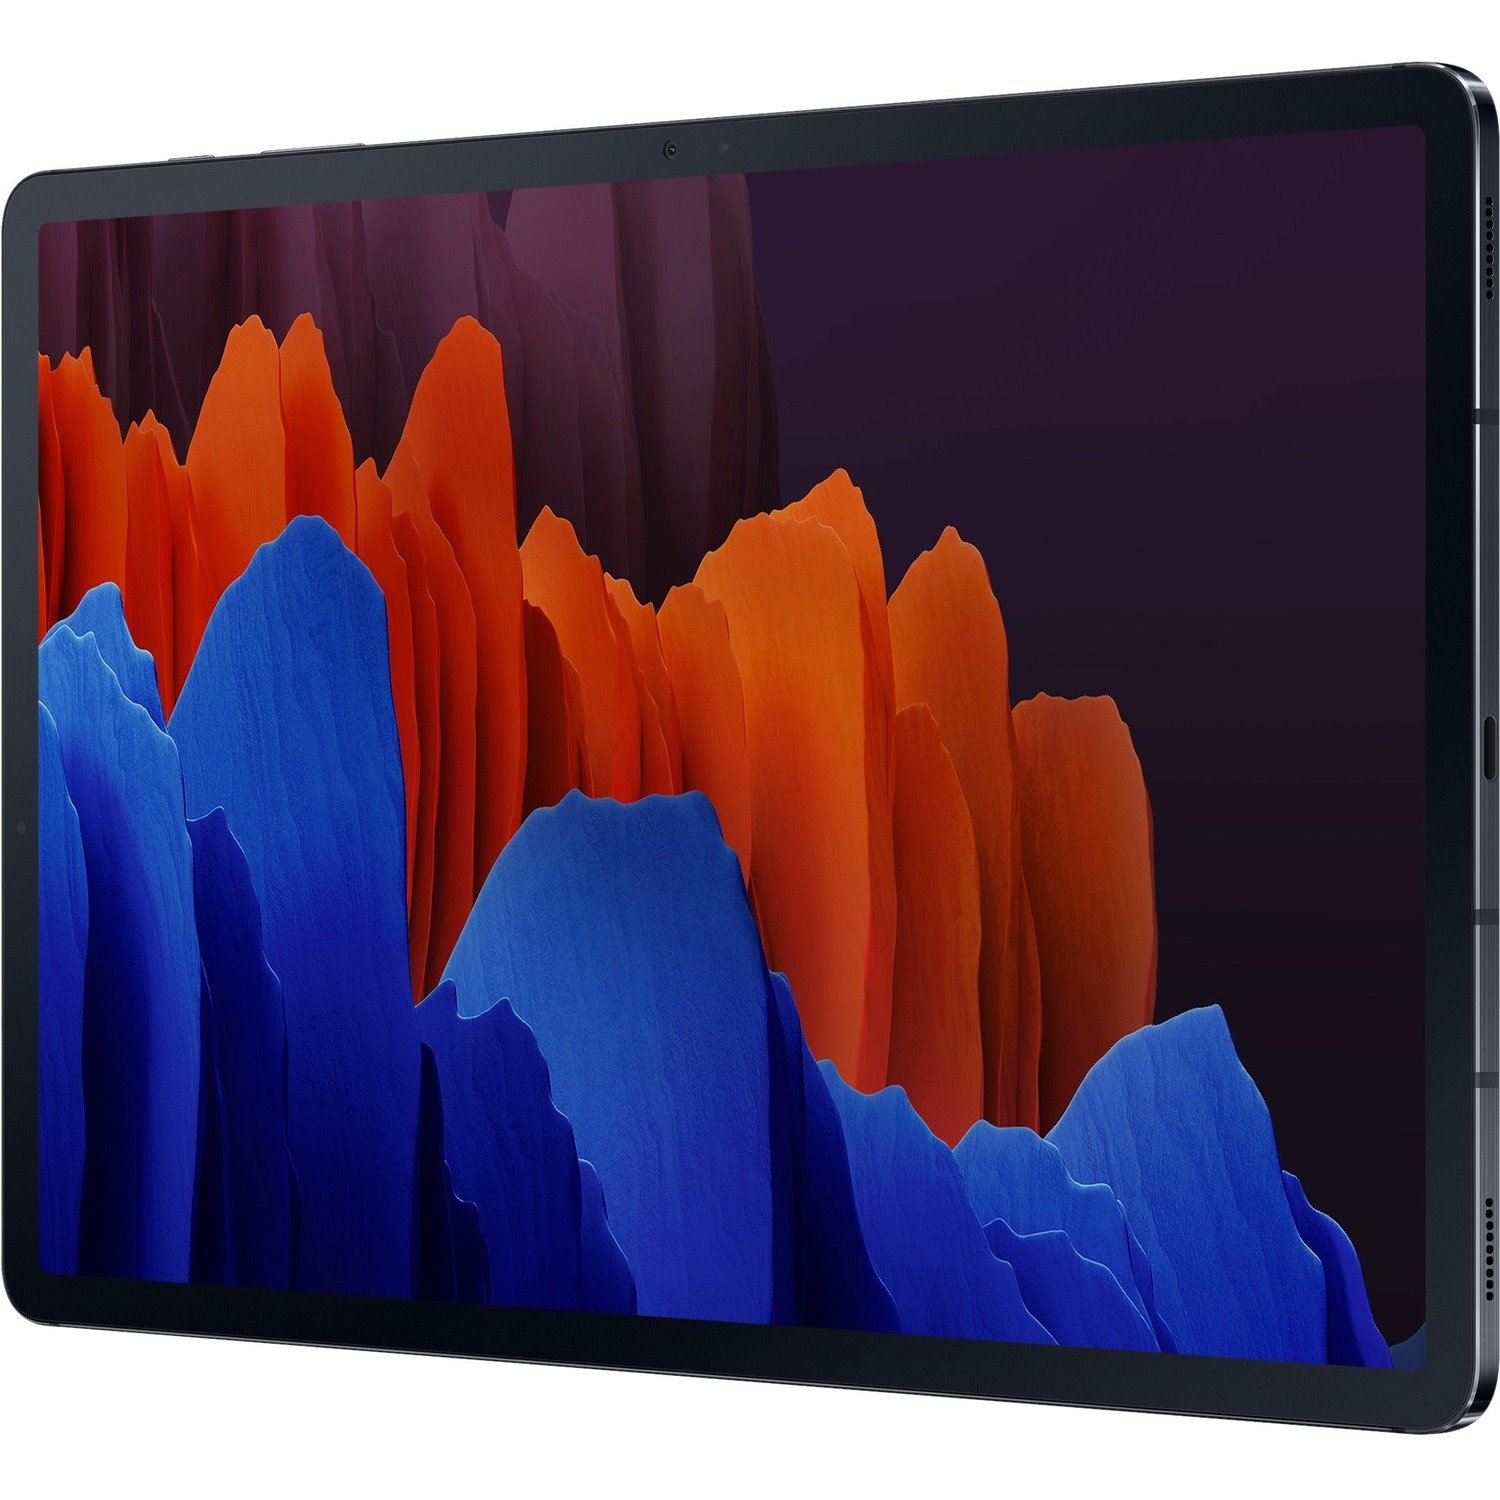 Samsung Galaxy Tab S7+ SM-T978 Tablet - 12.4" WQXGA+ - 6 GB - 128 GB Storage - Android 10 - 5G - Mystical Black